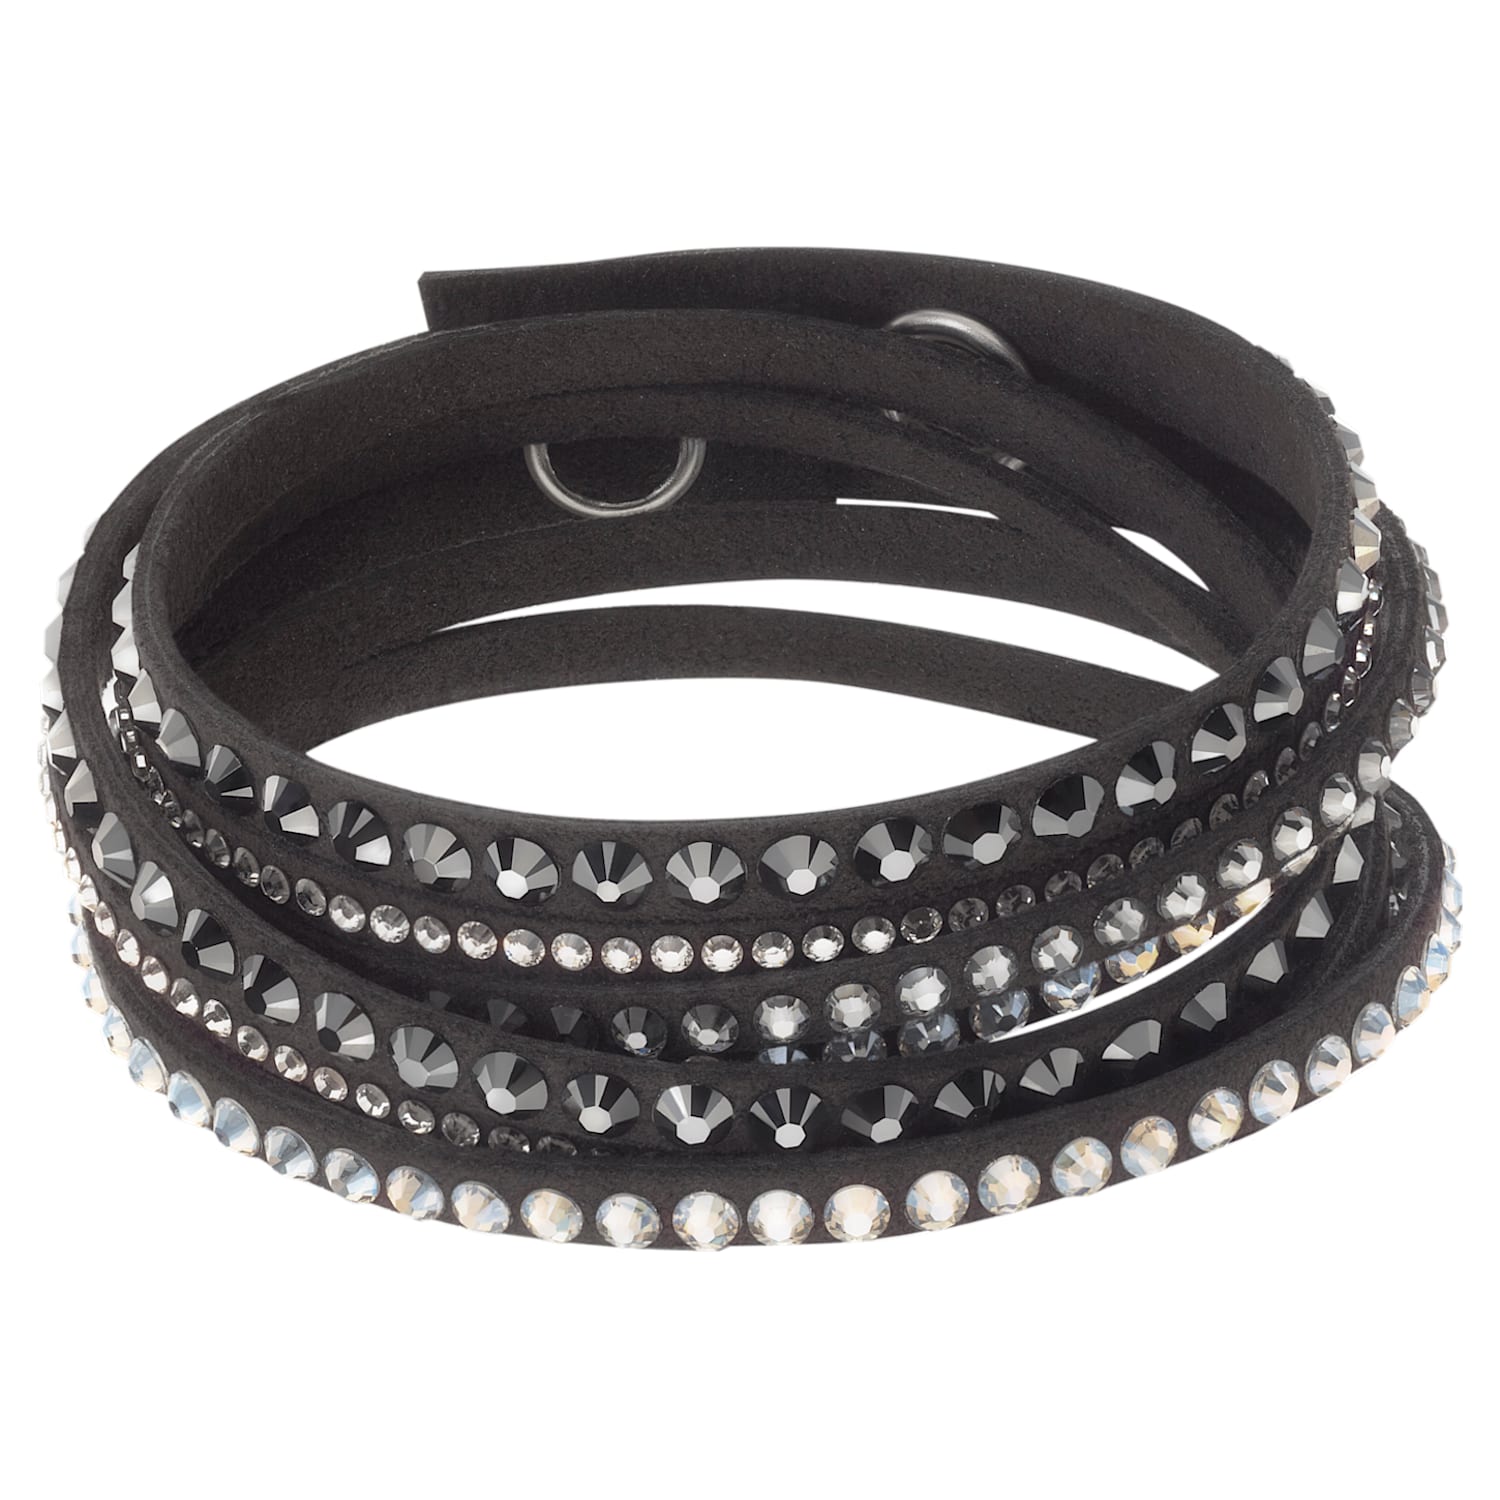 Slake Deluxe Bracelet, Black